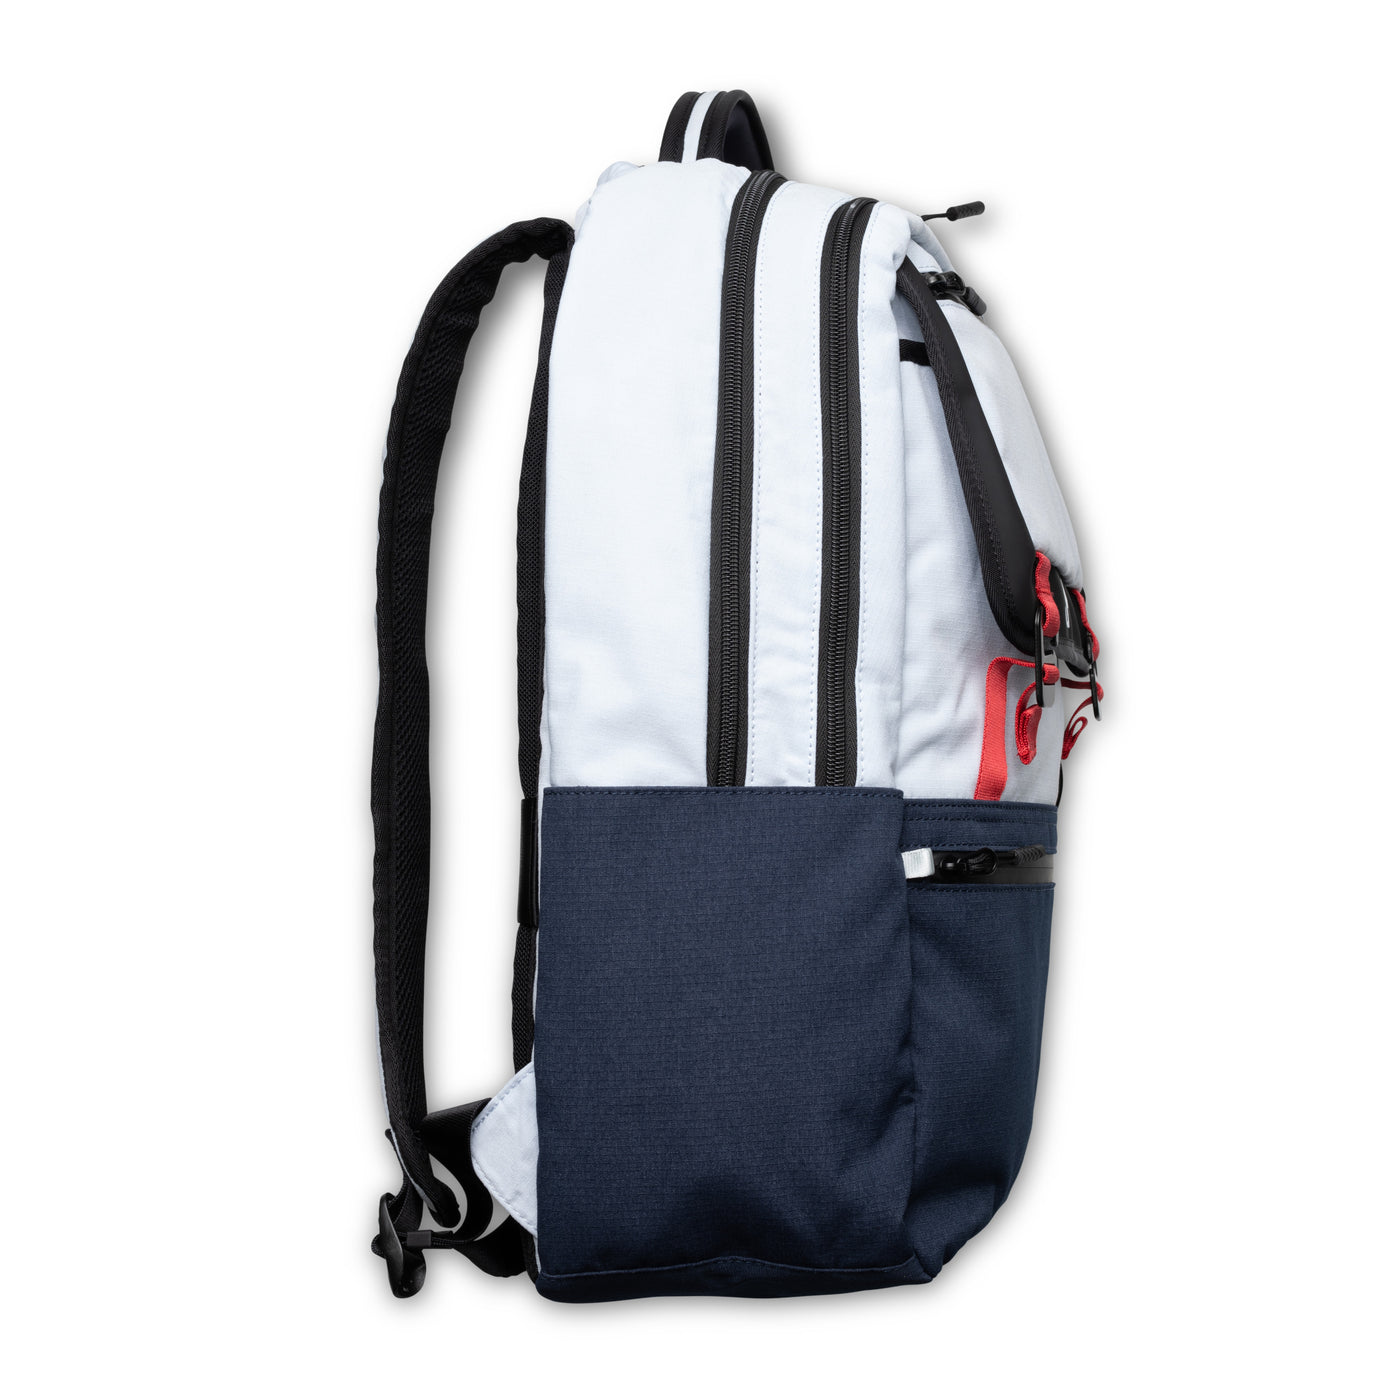 A2 Backpack - Soft Blue/Navy